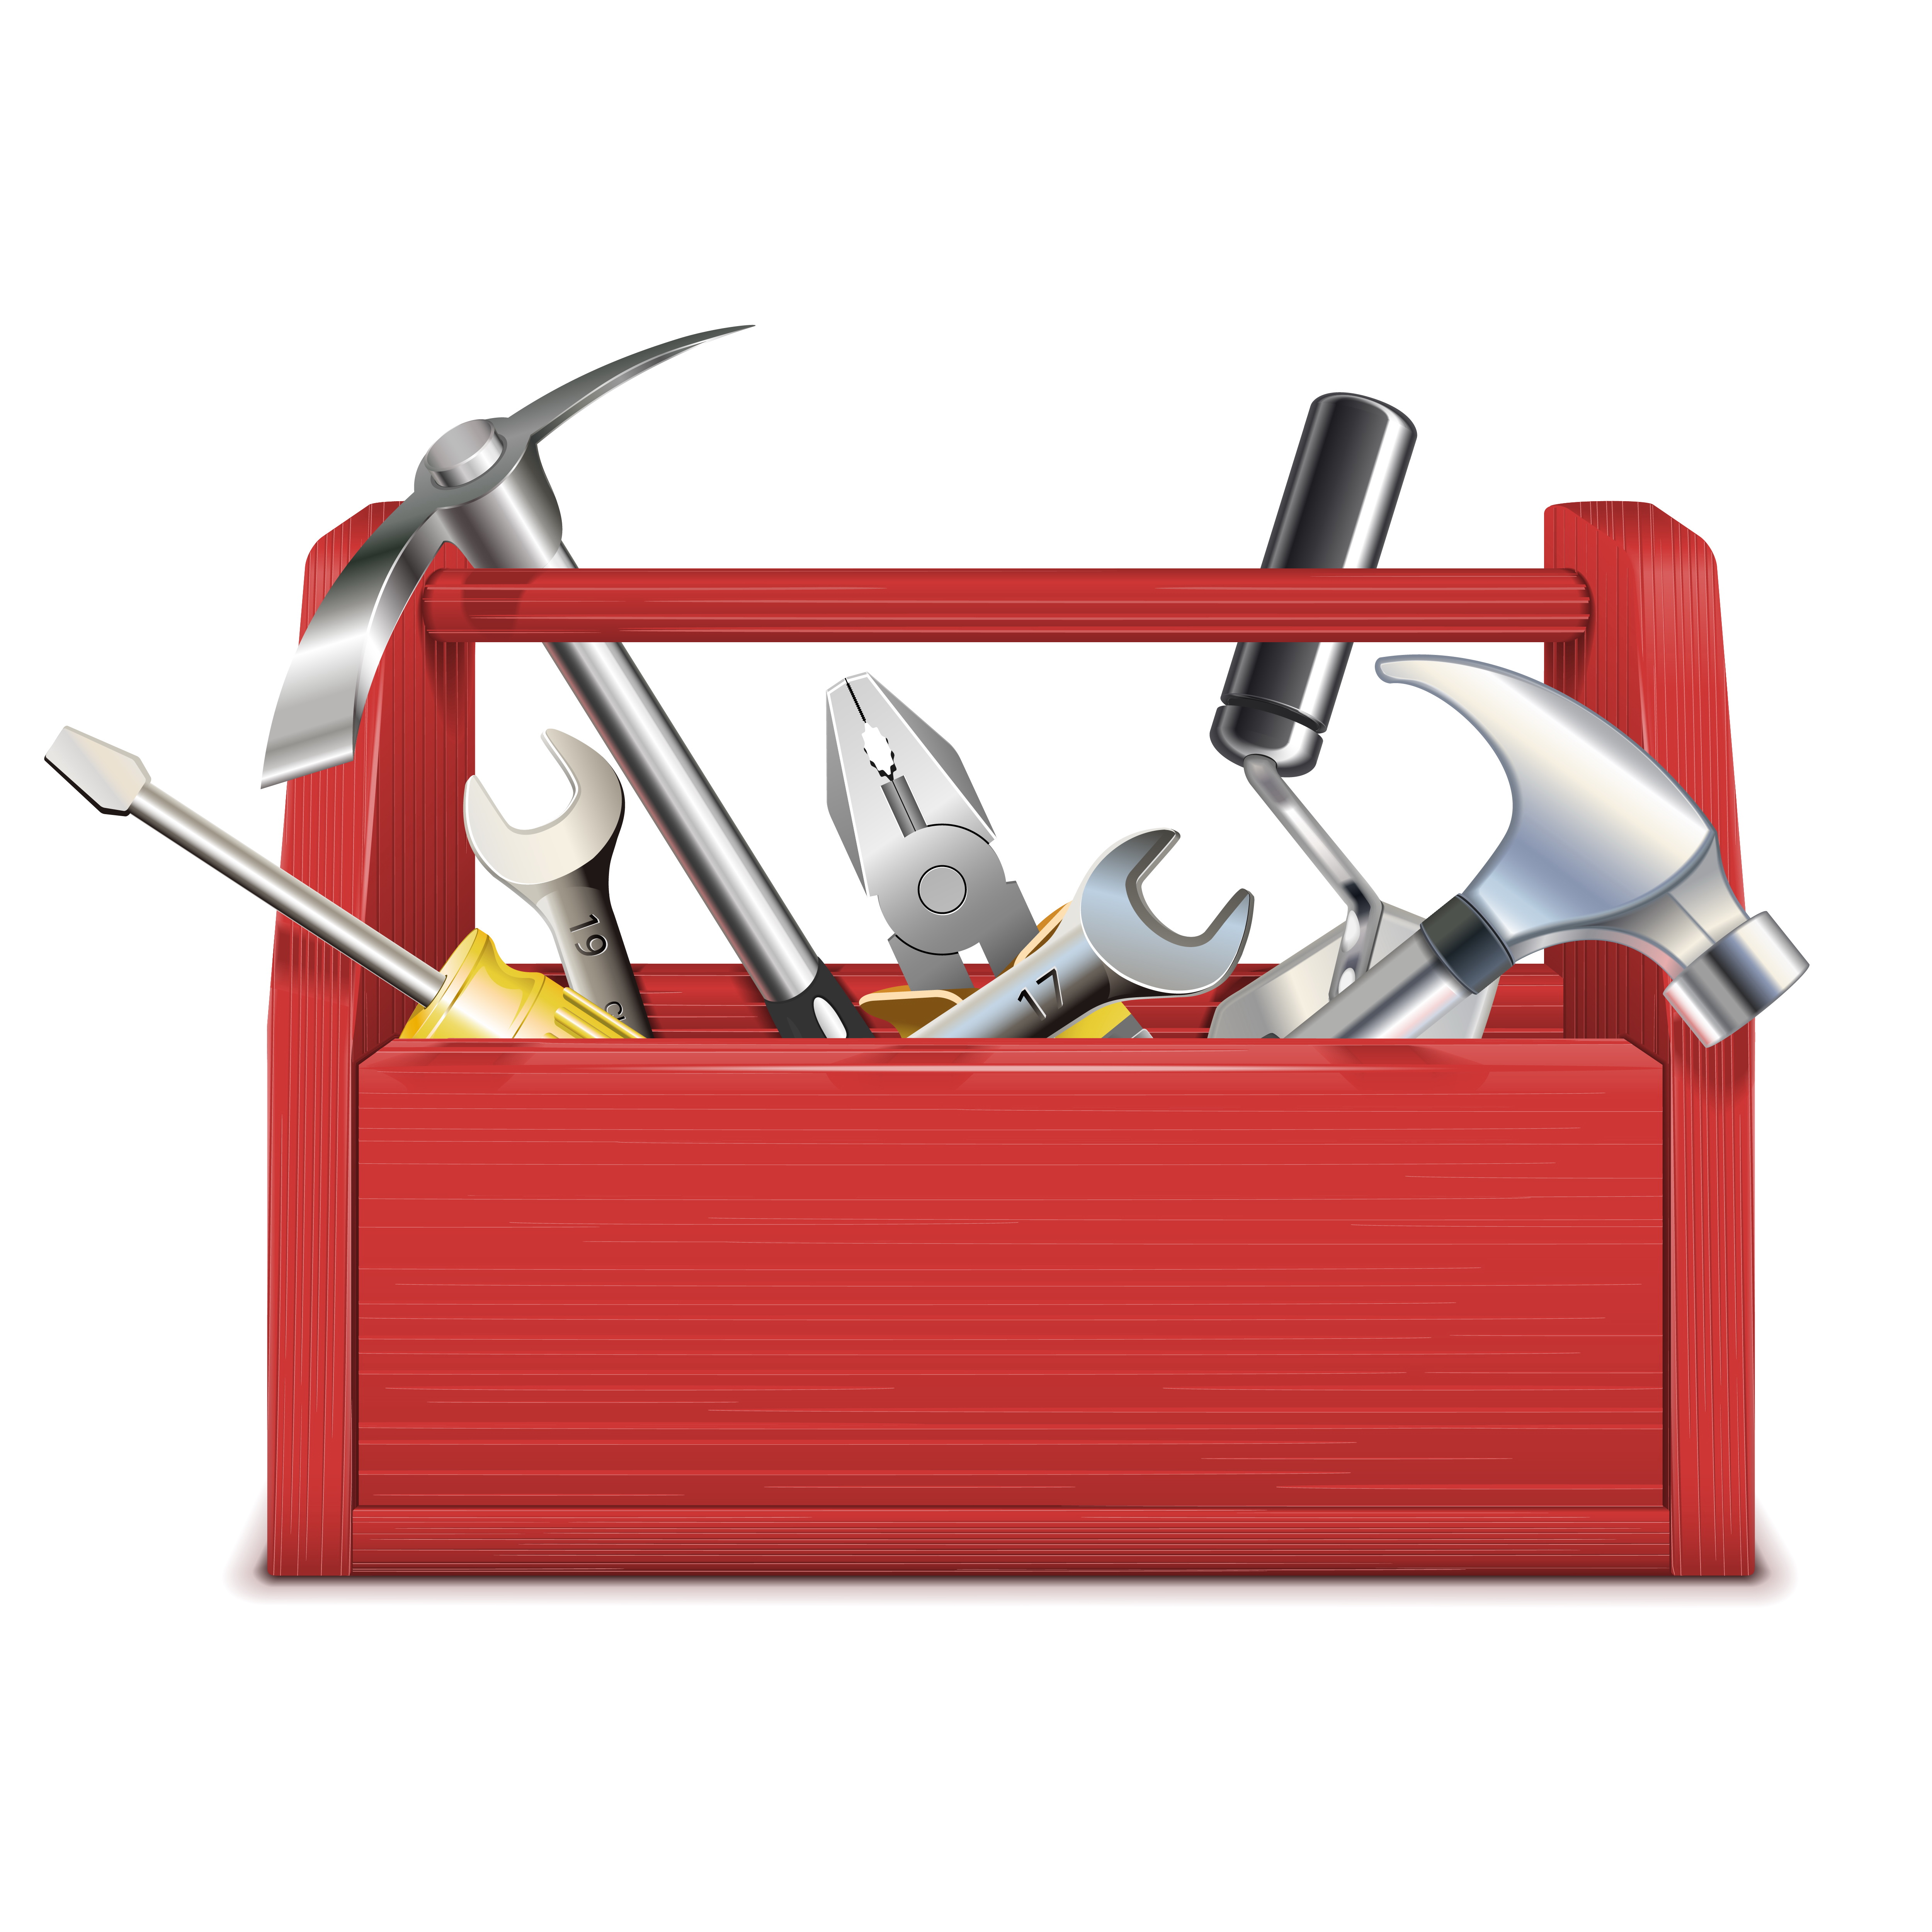 Tools for startups - https://depositphotos.com/30399737/stock-illustration-vector-red-toolbox.html